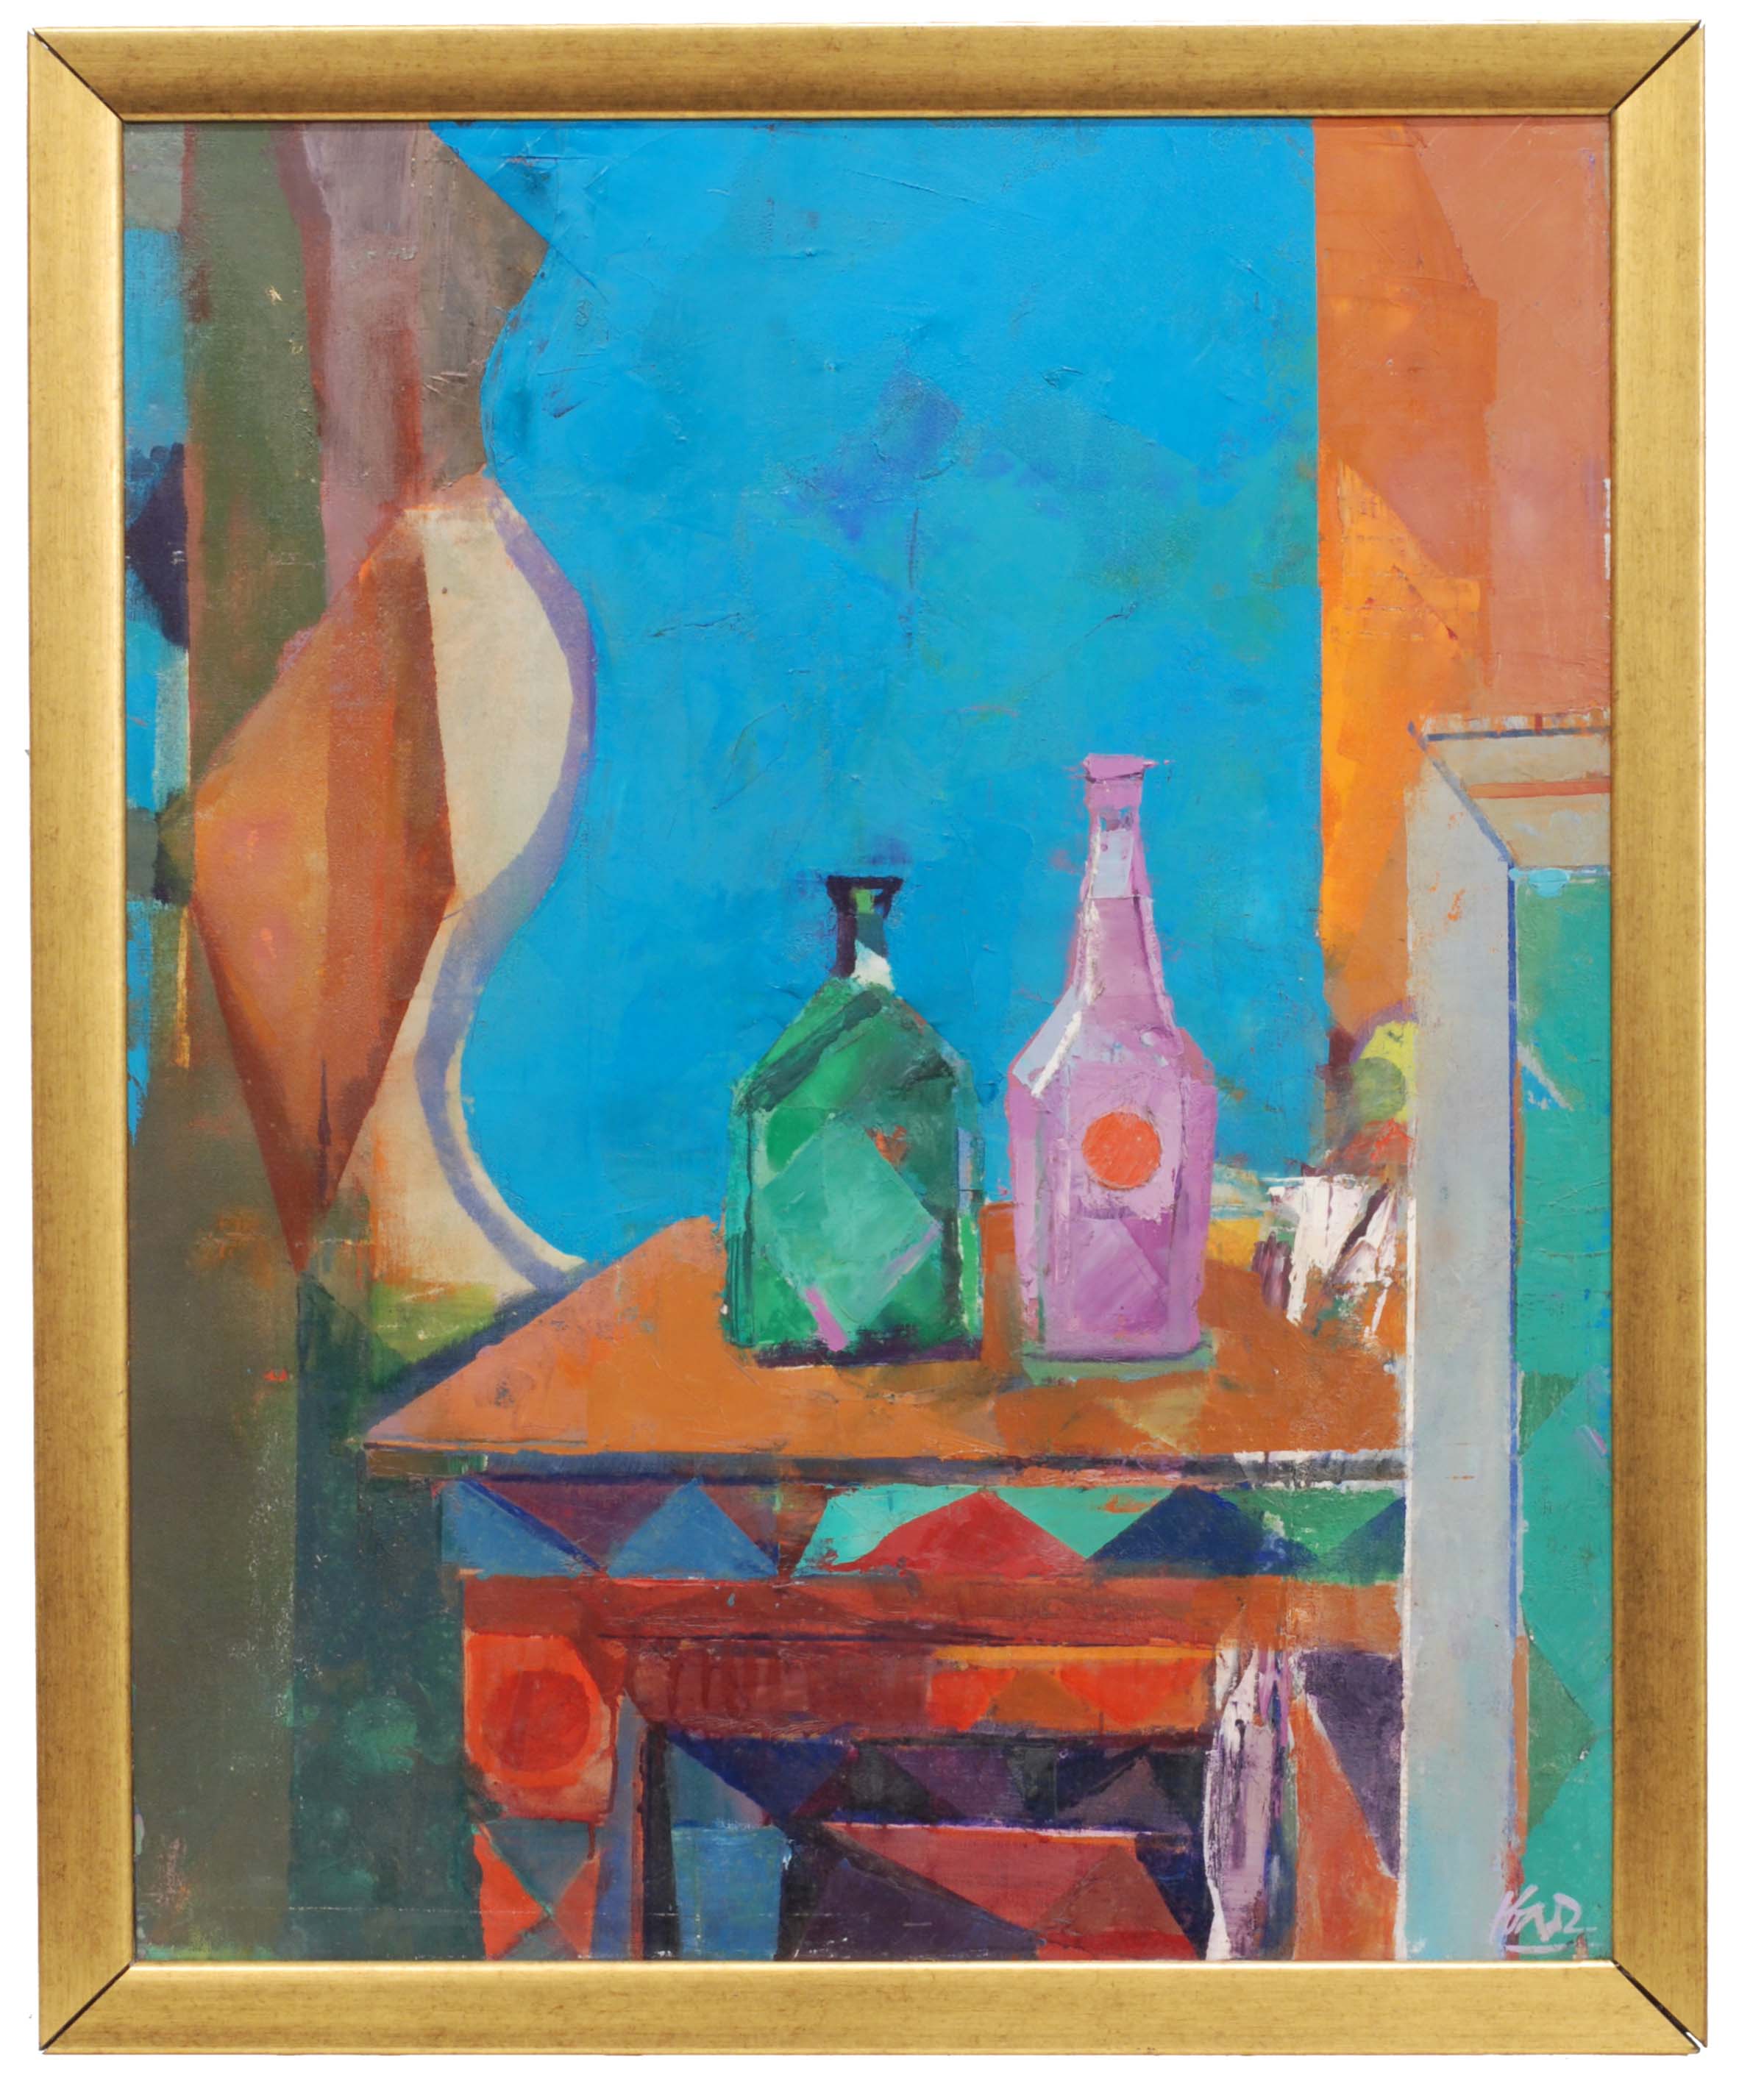 MIQUEL IBARZ (1920-1987) "Botellas"